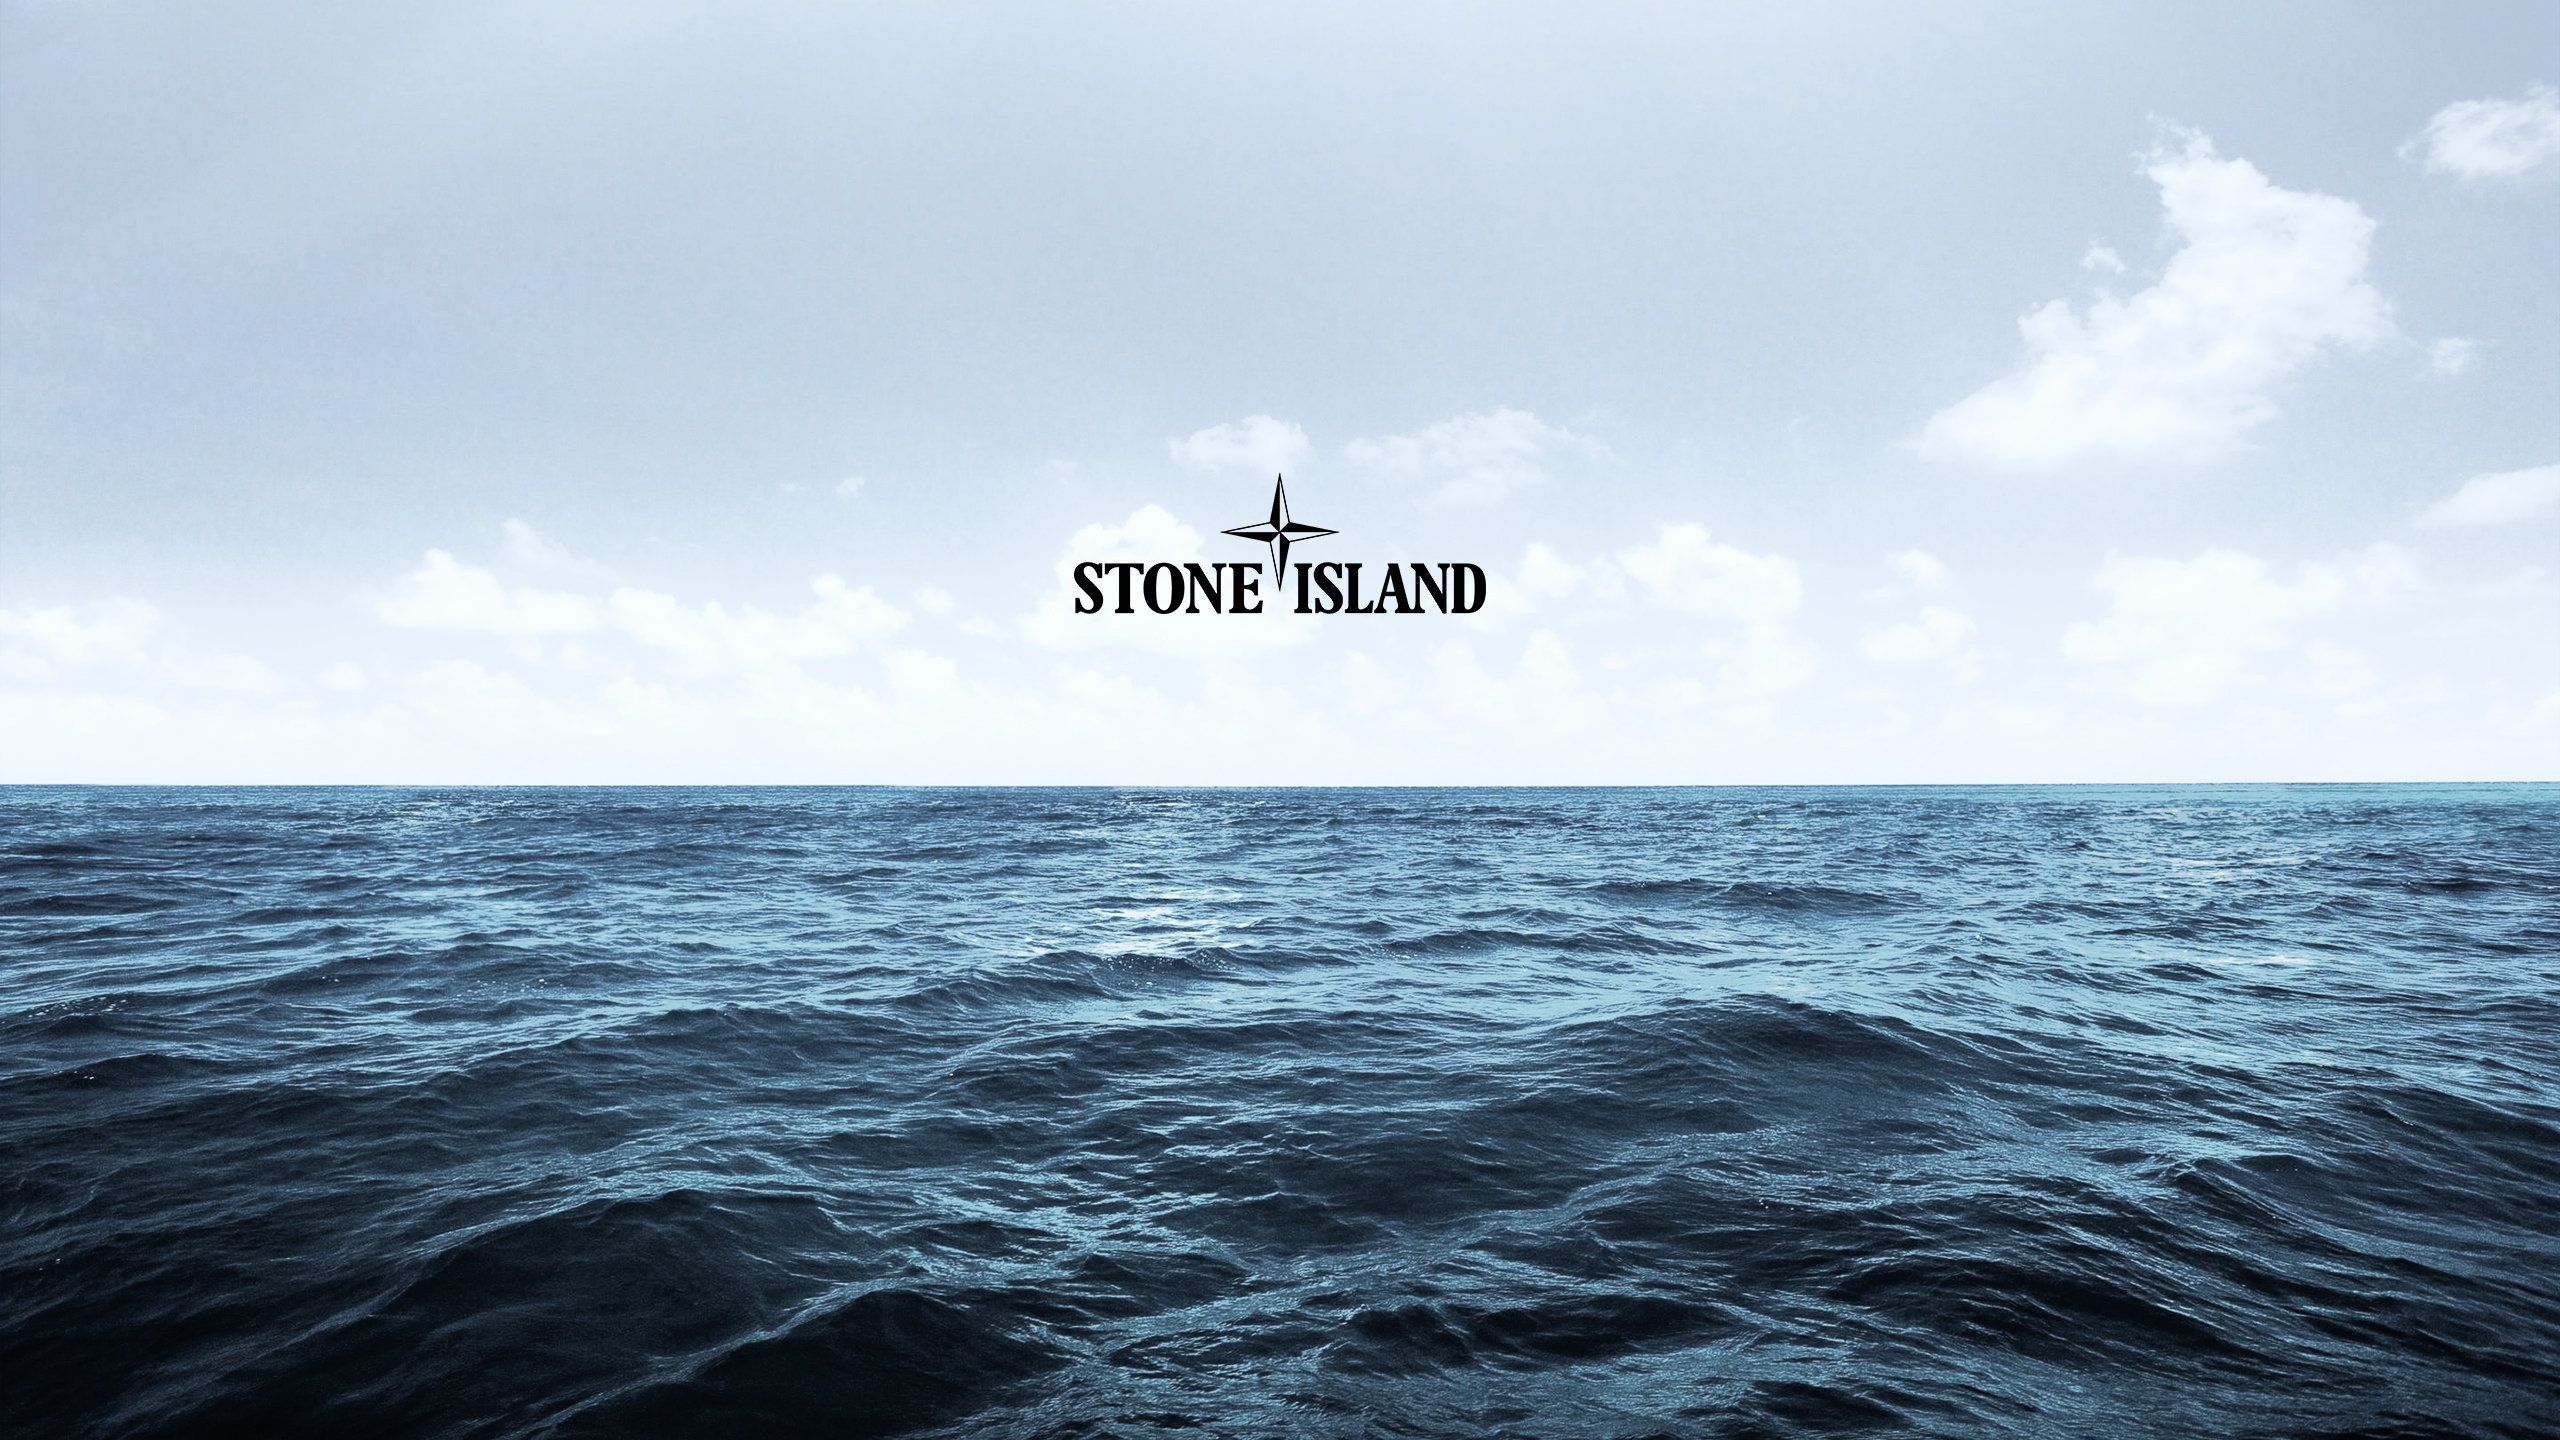  Stone Island Hintergrundbild 2560x1440. elsetge.cat. Stone island, Island wallpaper, Stone island hooligan